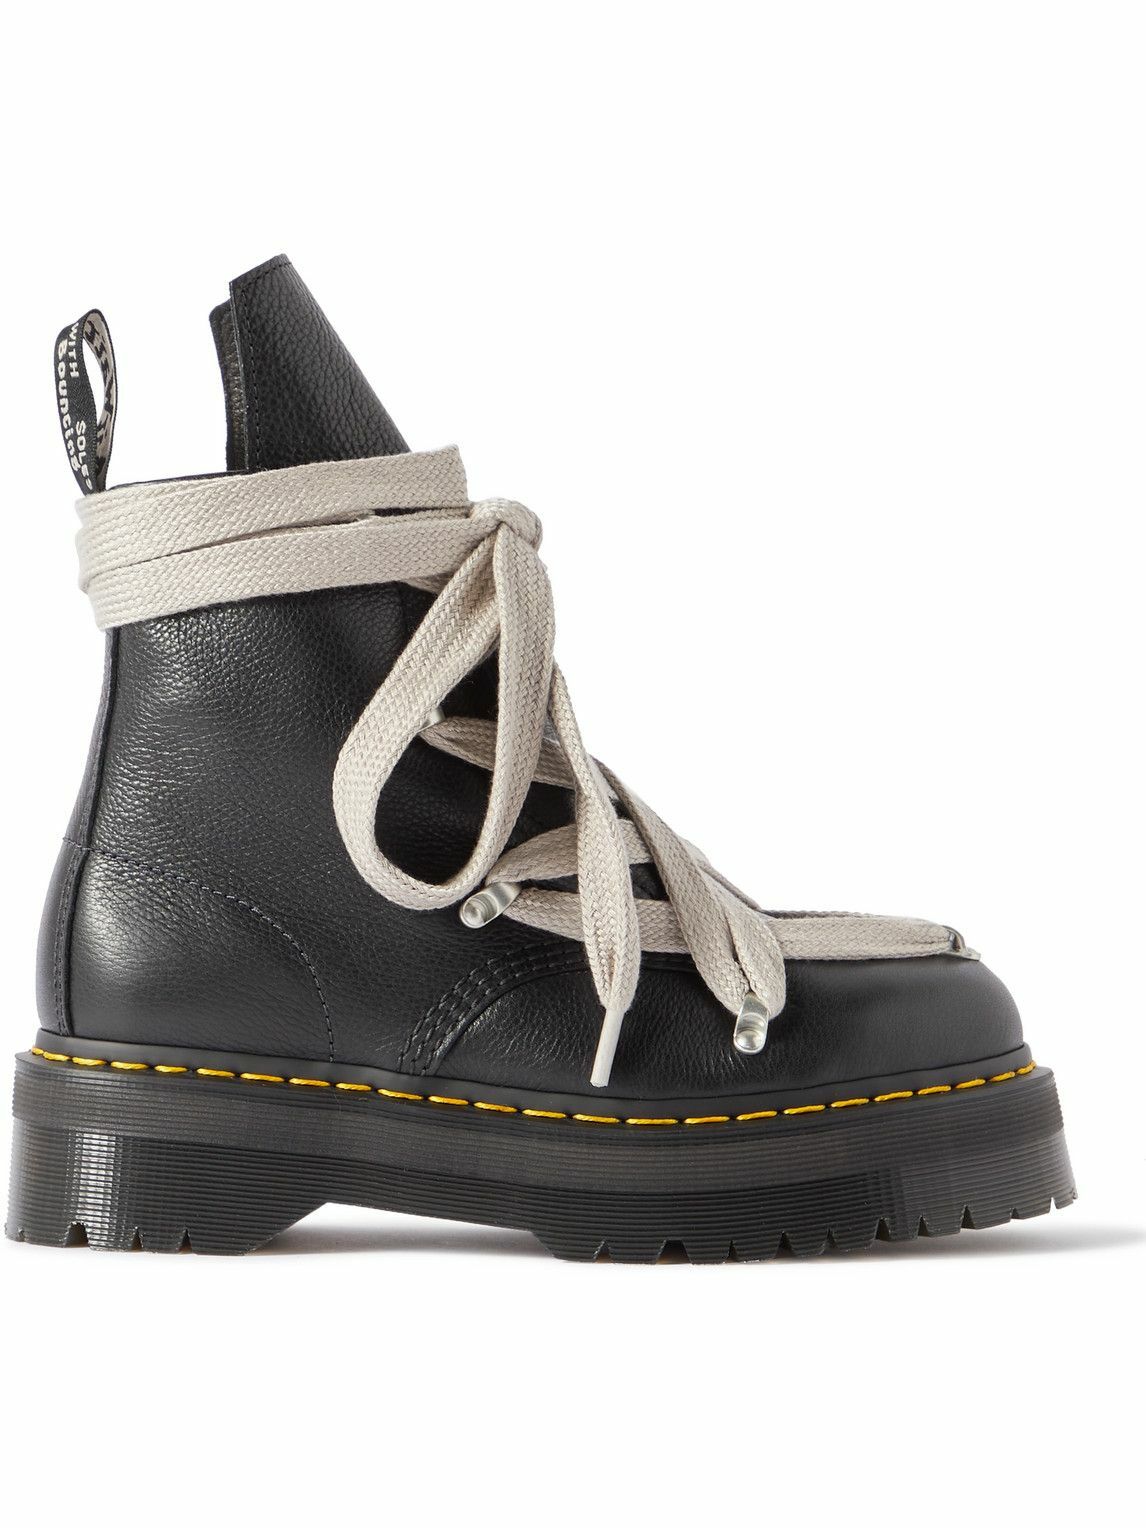 Photo: Rick Owens - Dr. Martens Full-Grain Leather Boots - Black